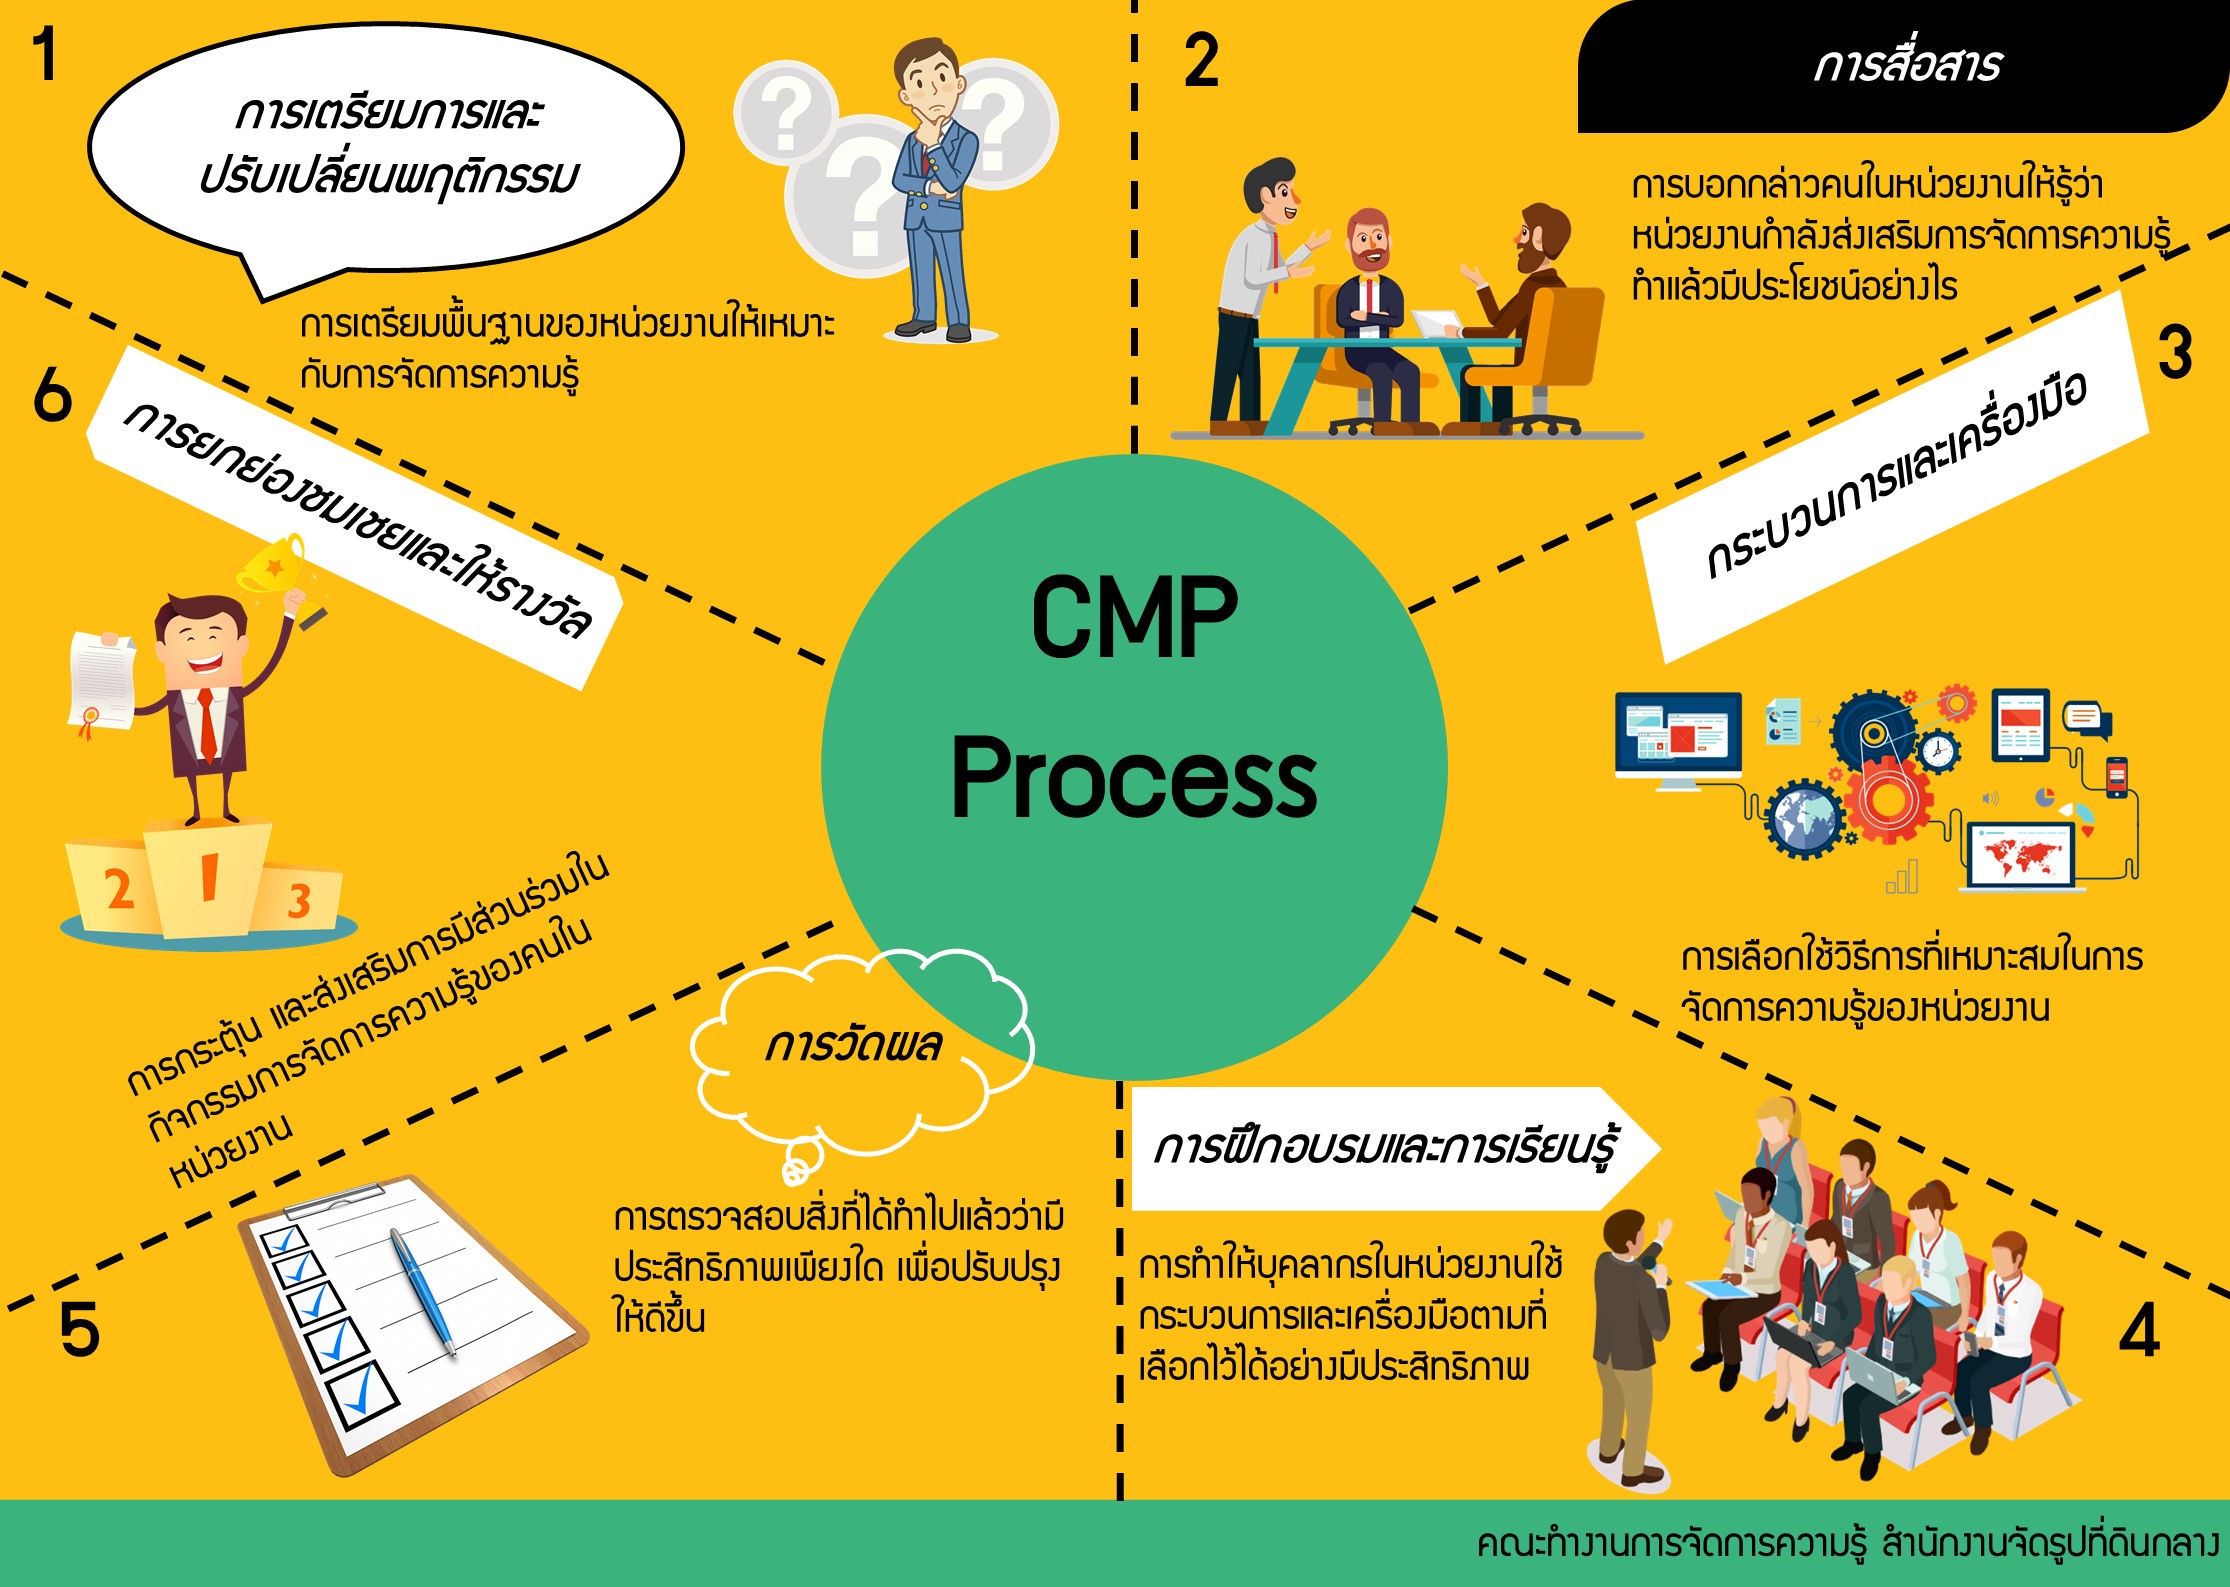 CMProcress